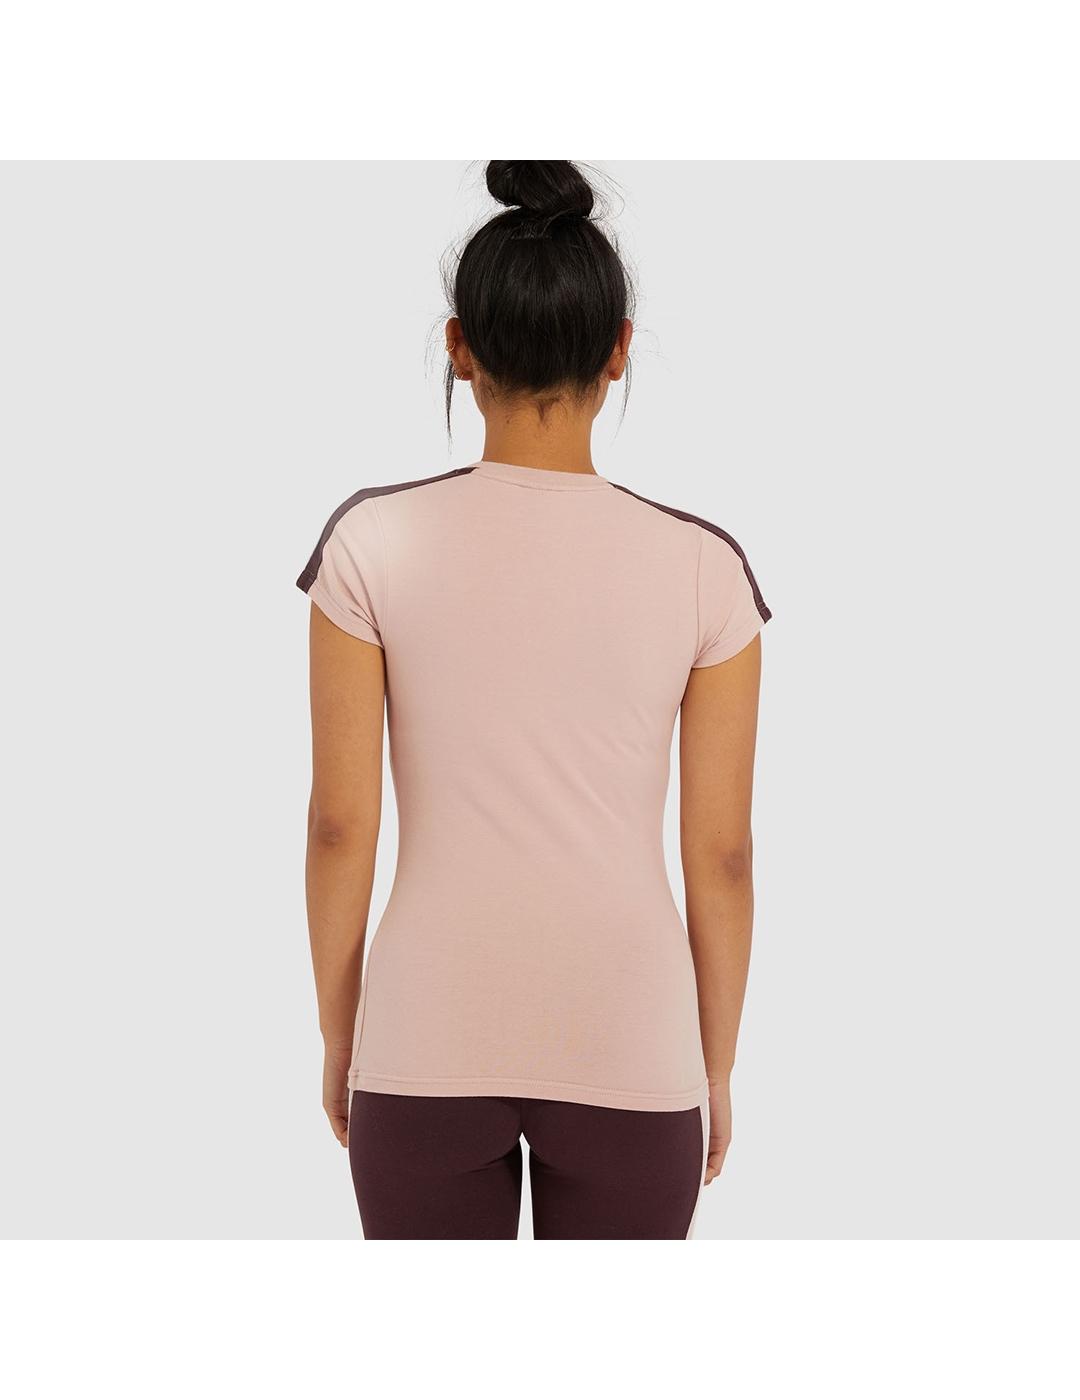 Camiseta Ellesse Malis pink